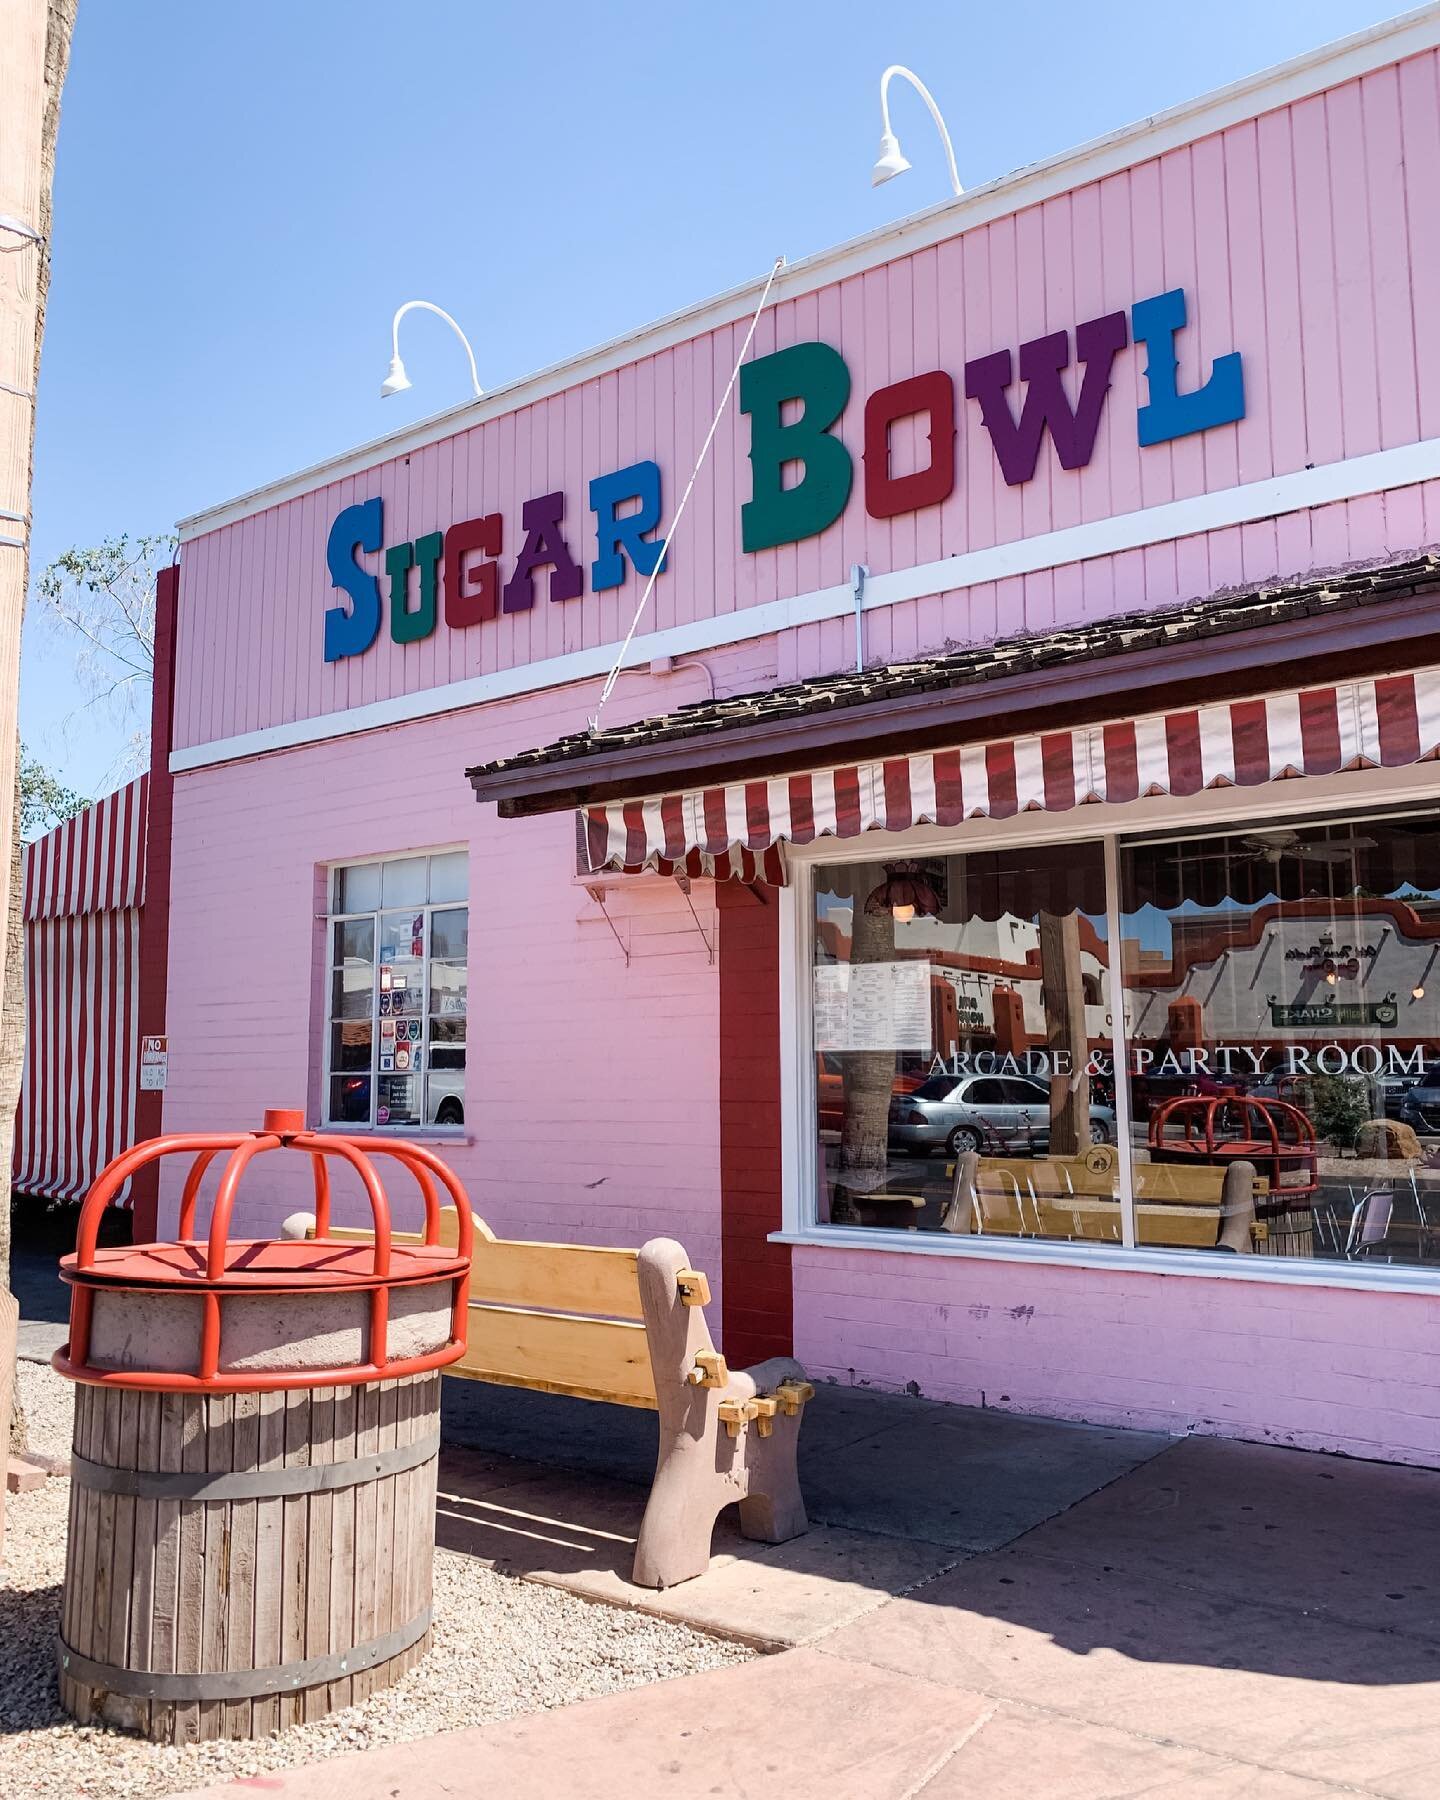 This ice cream shop in Scottsdale, Arizona is covered in pink 🍨 💗 

#sugarbowl #arizona #scottsdale #scottsdaleaz